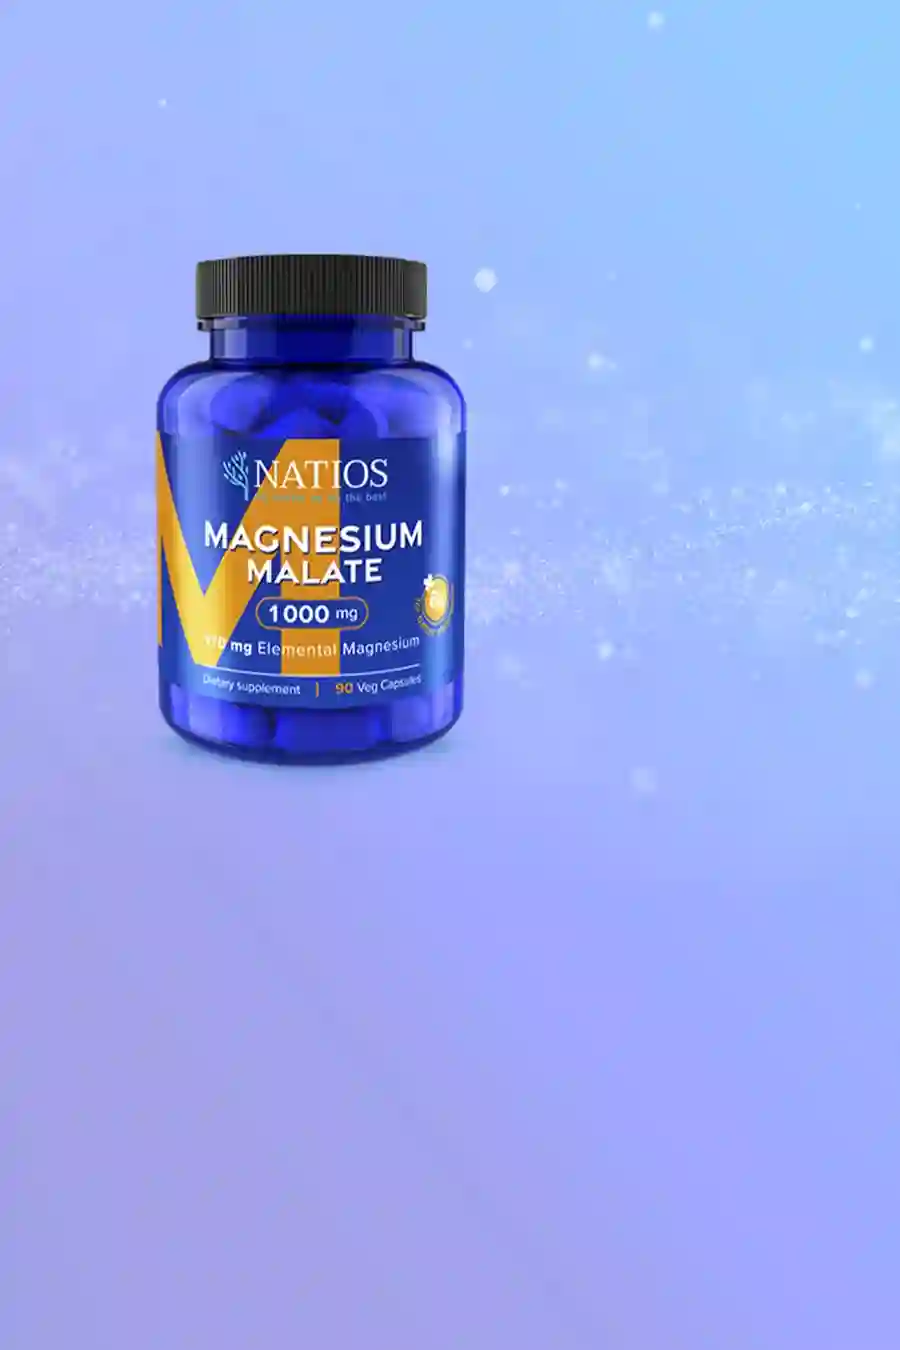 Natios Magnesium Malate